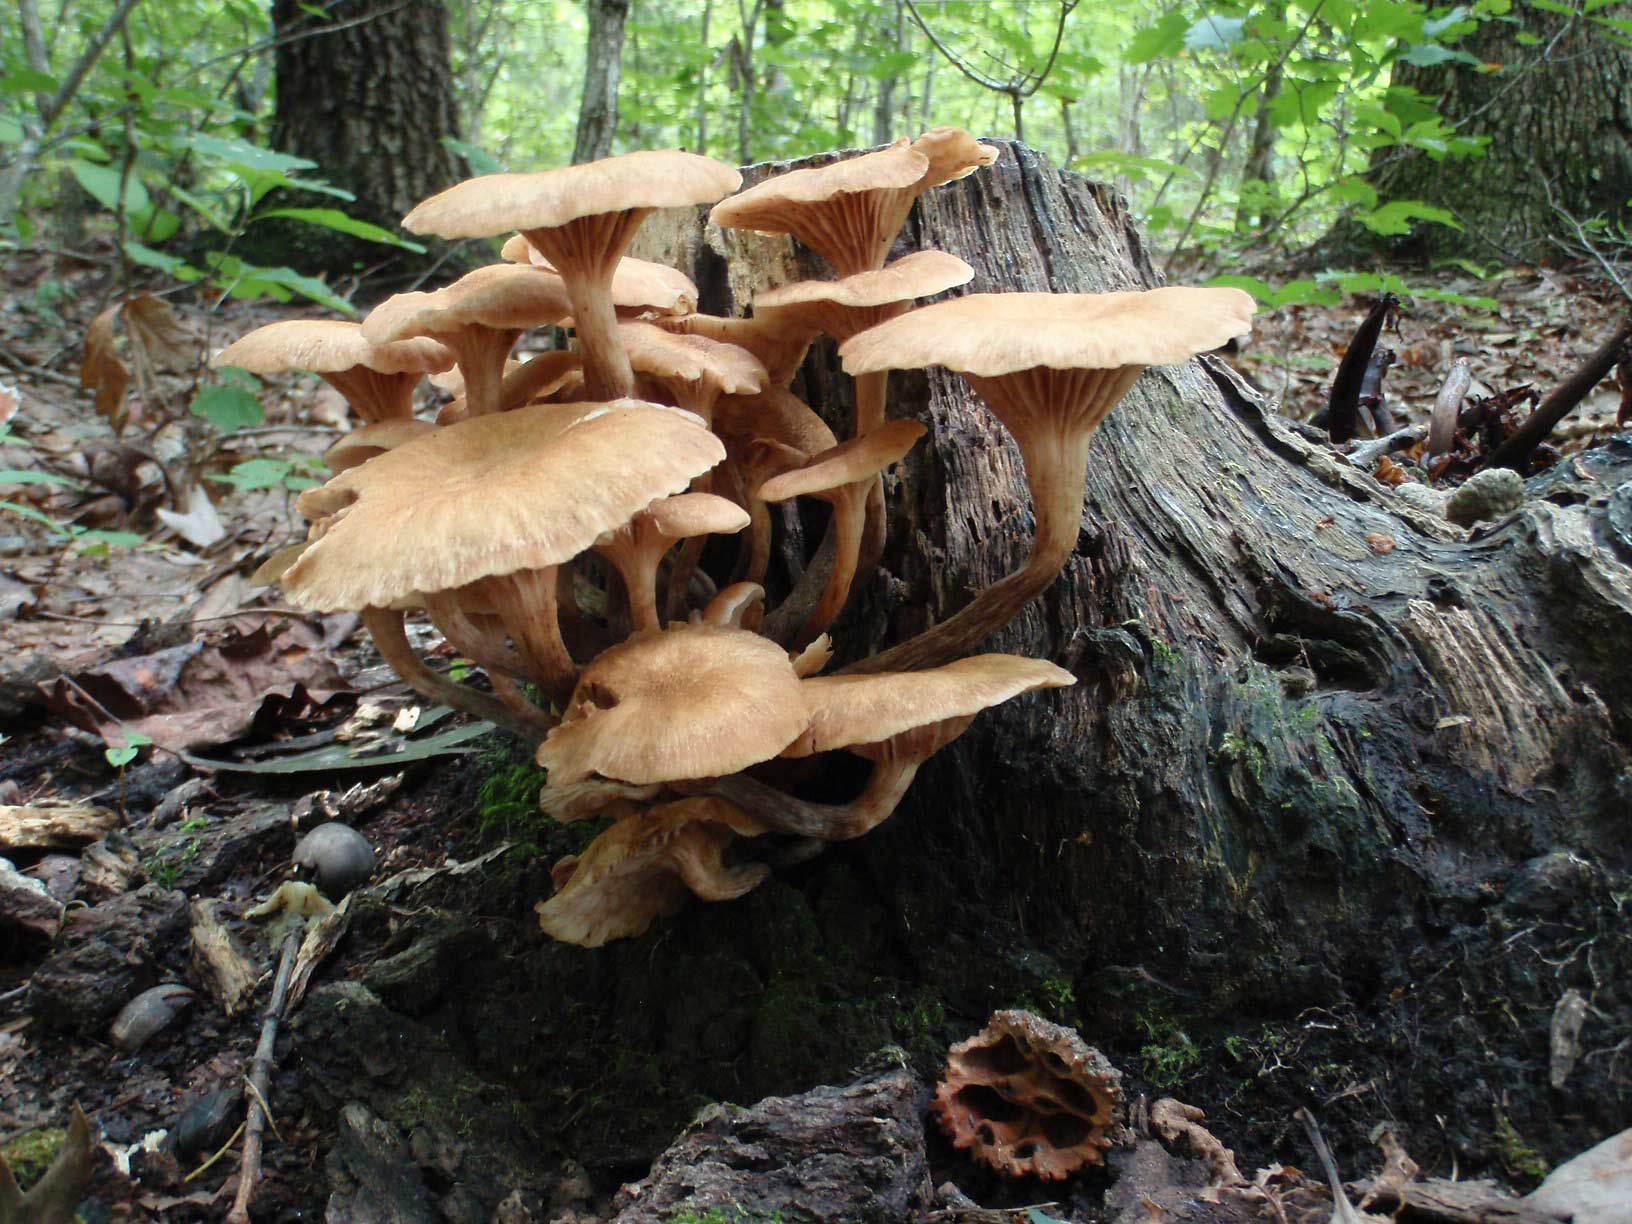 wild fungi growing on a tree stump